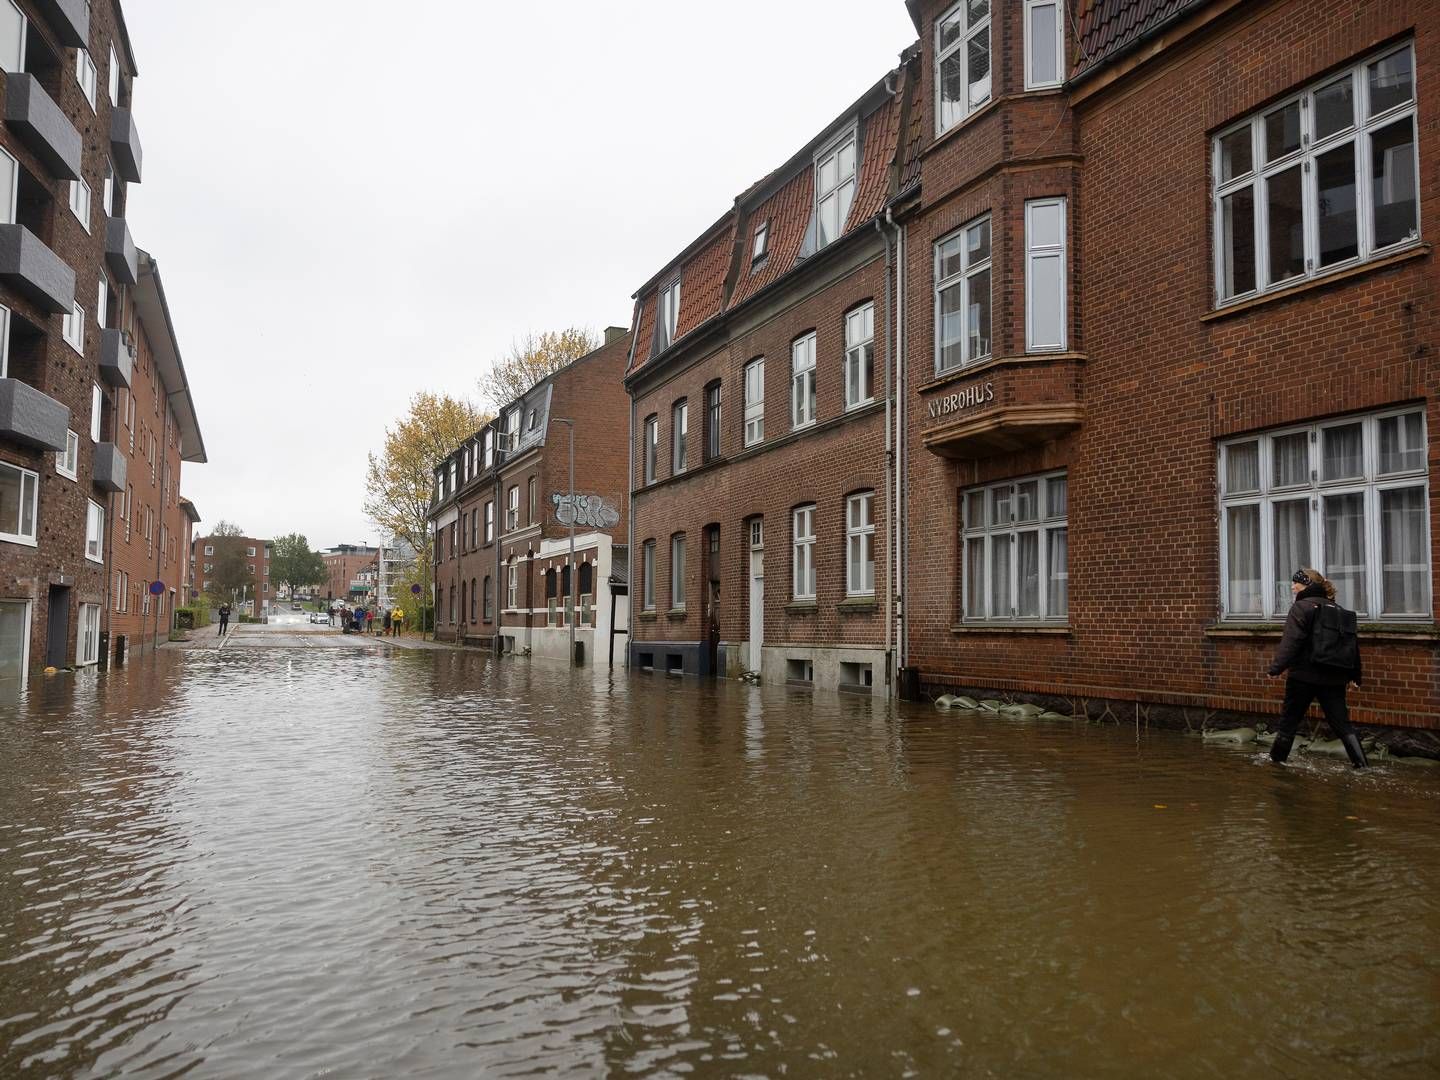 2023 slog den hidtidige nedbørsrekord. Her ses vandmasser i Kolding i oktober. | Foto: Thomas Borberg/Ritzau Scanpix